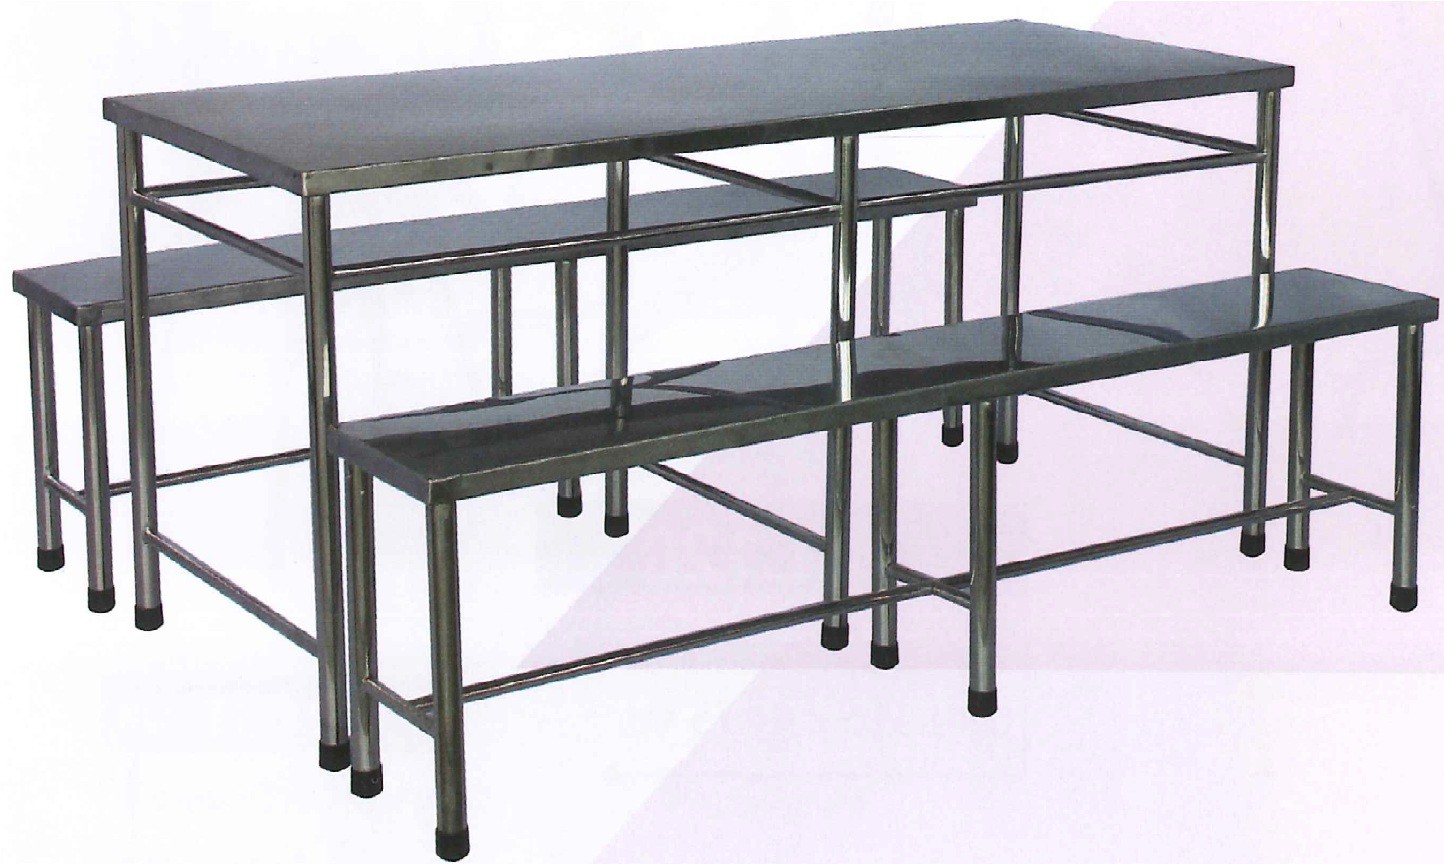 DG/TC-ST75180,โต๊ะสแตนเลสเกรด304 หนา1นิ้ว ขากลม1.5นิ้ว หนา1มิล,โต๊ะสแตนเลส,โต๊ะพับสแตนเลส,โต๊ะรับประทานอาหาร,โต๊ะพับ,โต๊ะ,table